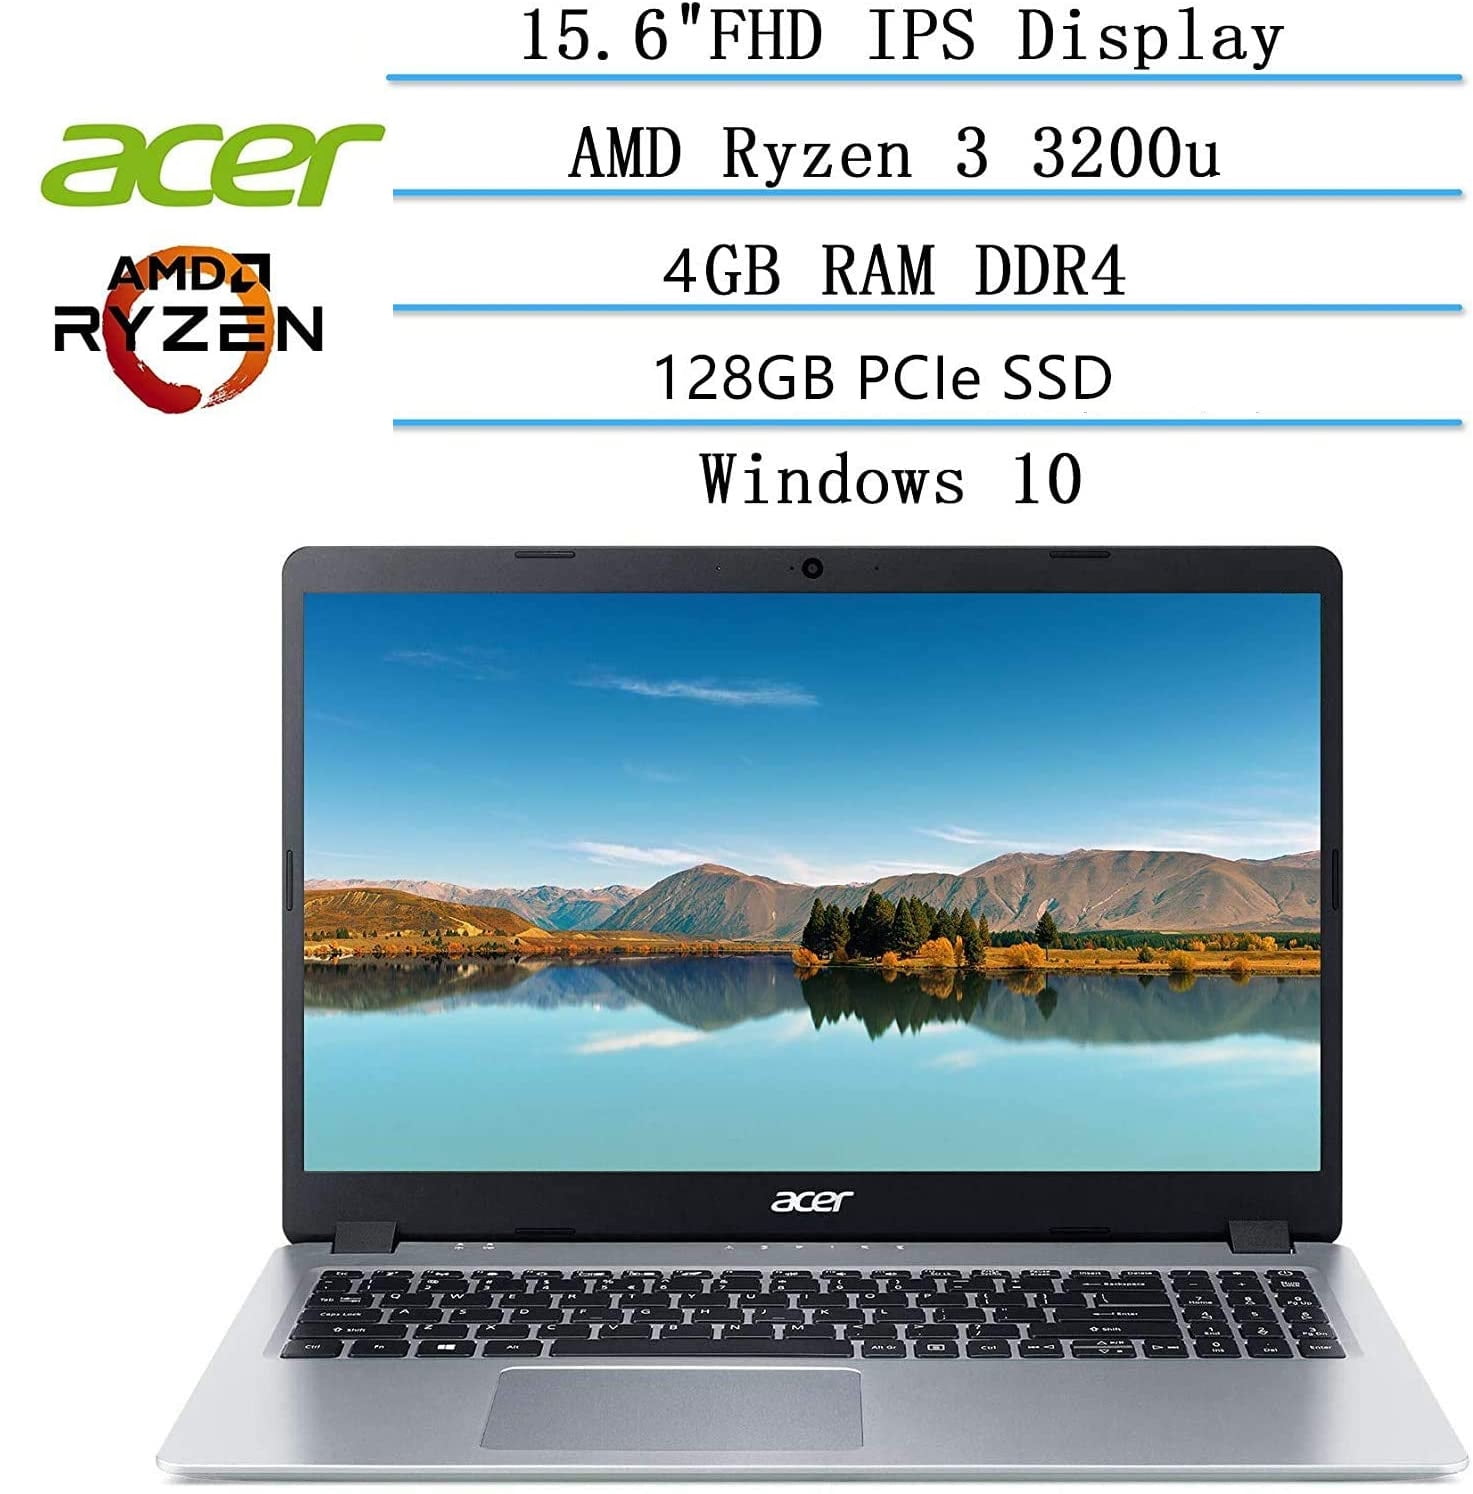 Maak los Marine verdamping 2021 Newest Acer Aspire 5 Slim Laptop 15.6" FHD IPS Display, AMD Ryzen 3  3200u-Dual Core (up to 3.5GHz), Vega 3 Graphics, 4GB RAM DDR4, 128GB PCIe  SSD, Win10 - Walmart.com